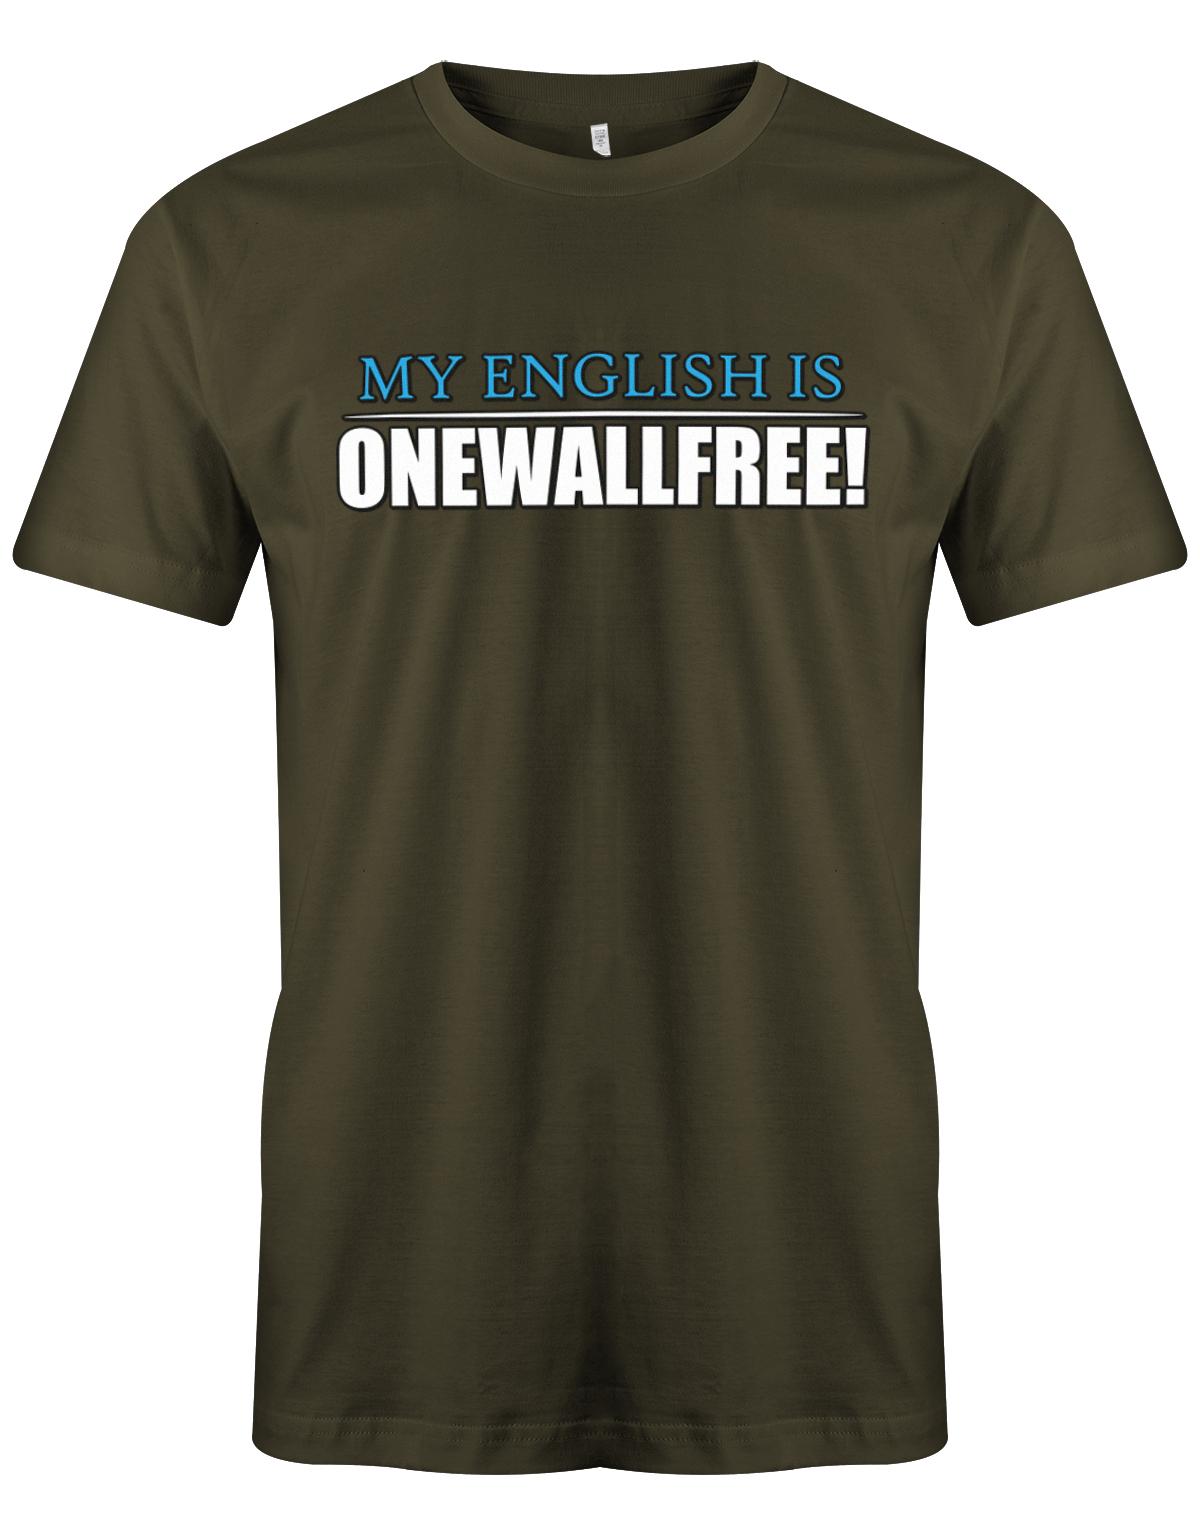 My-English-is-onewallfree-herren-Shirt-Army